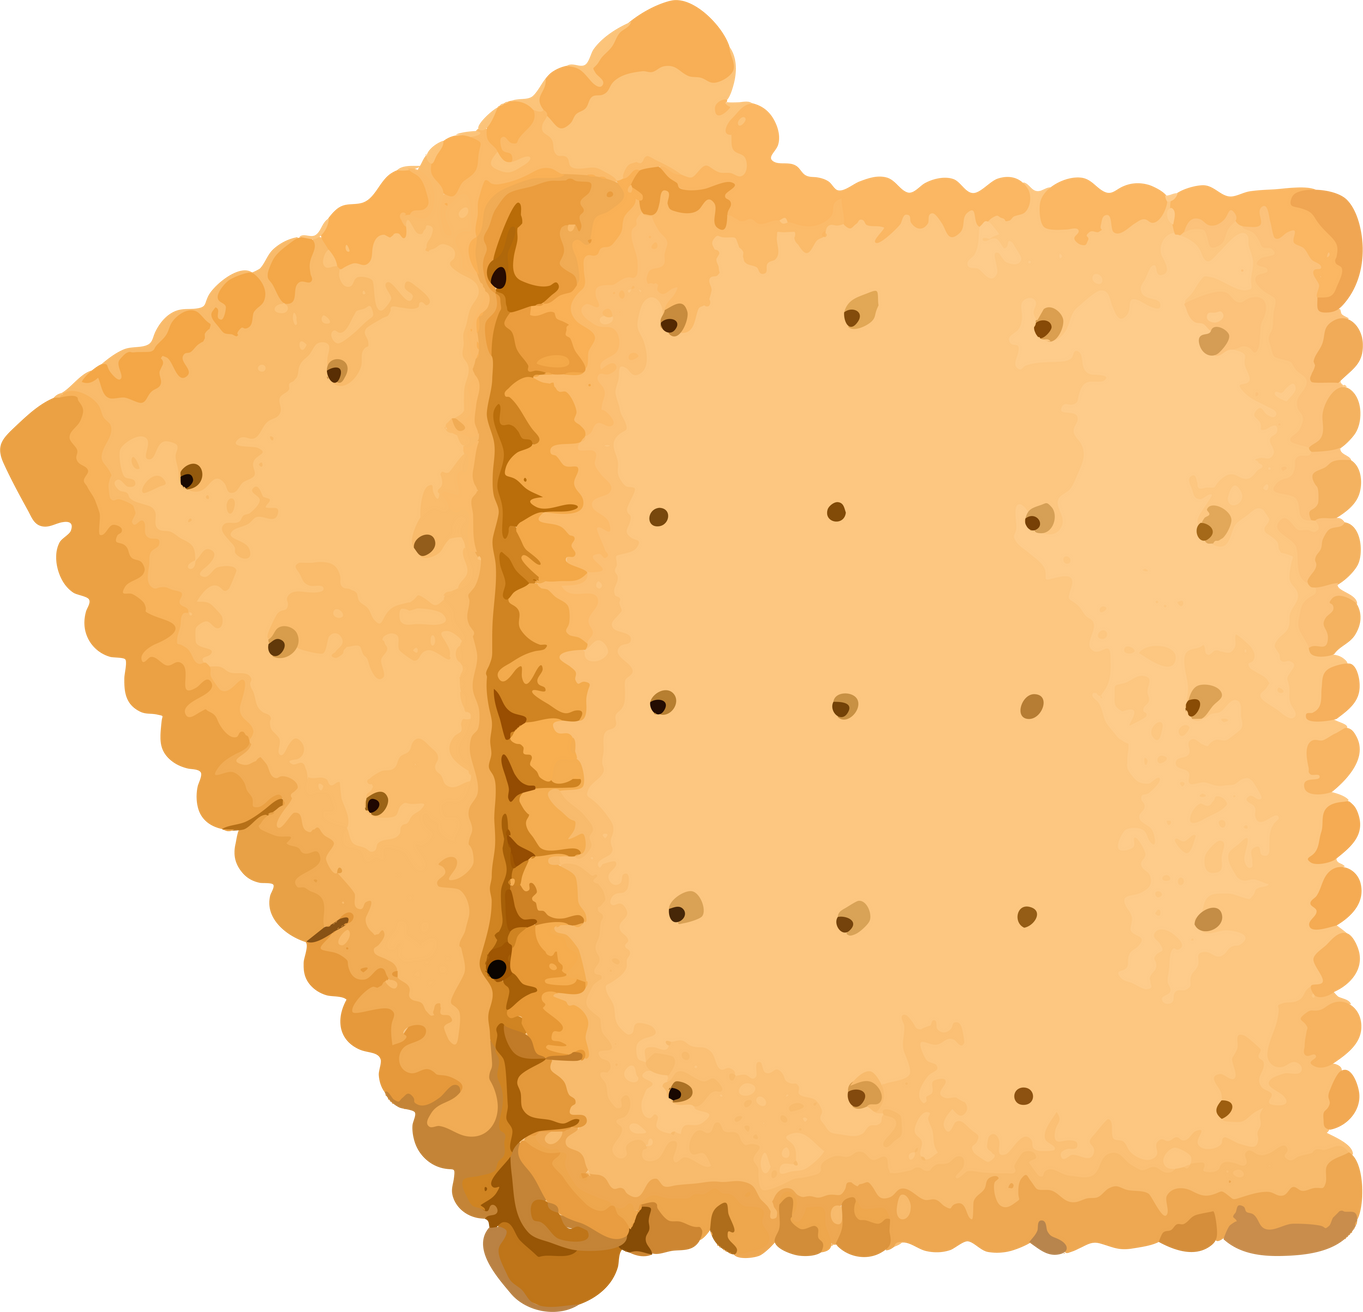 Golden Biscuit Crackers Illustration